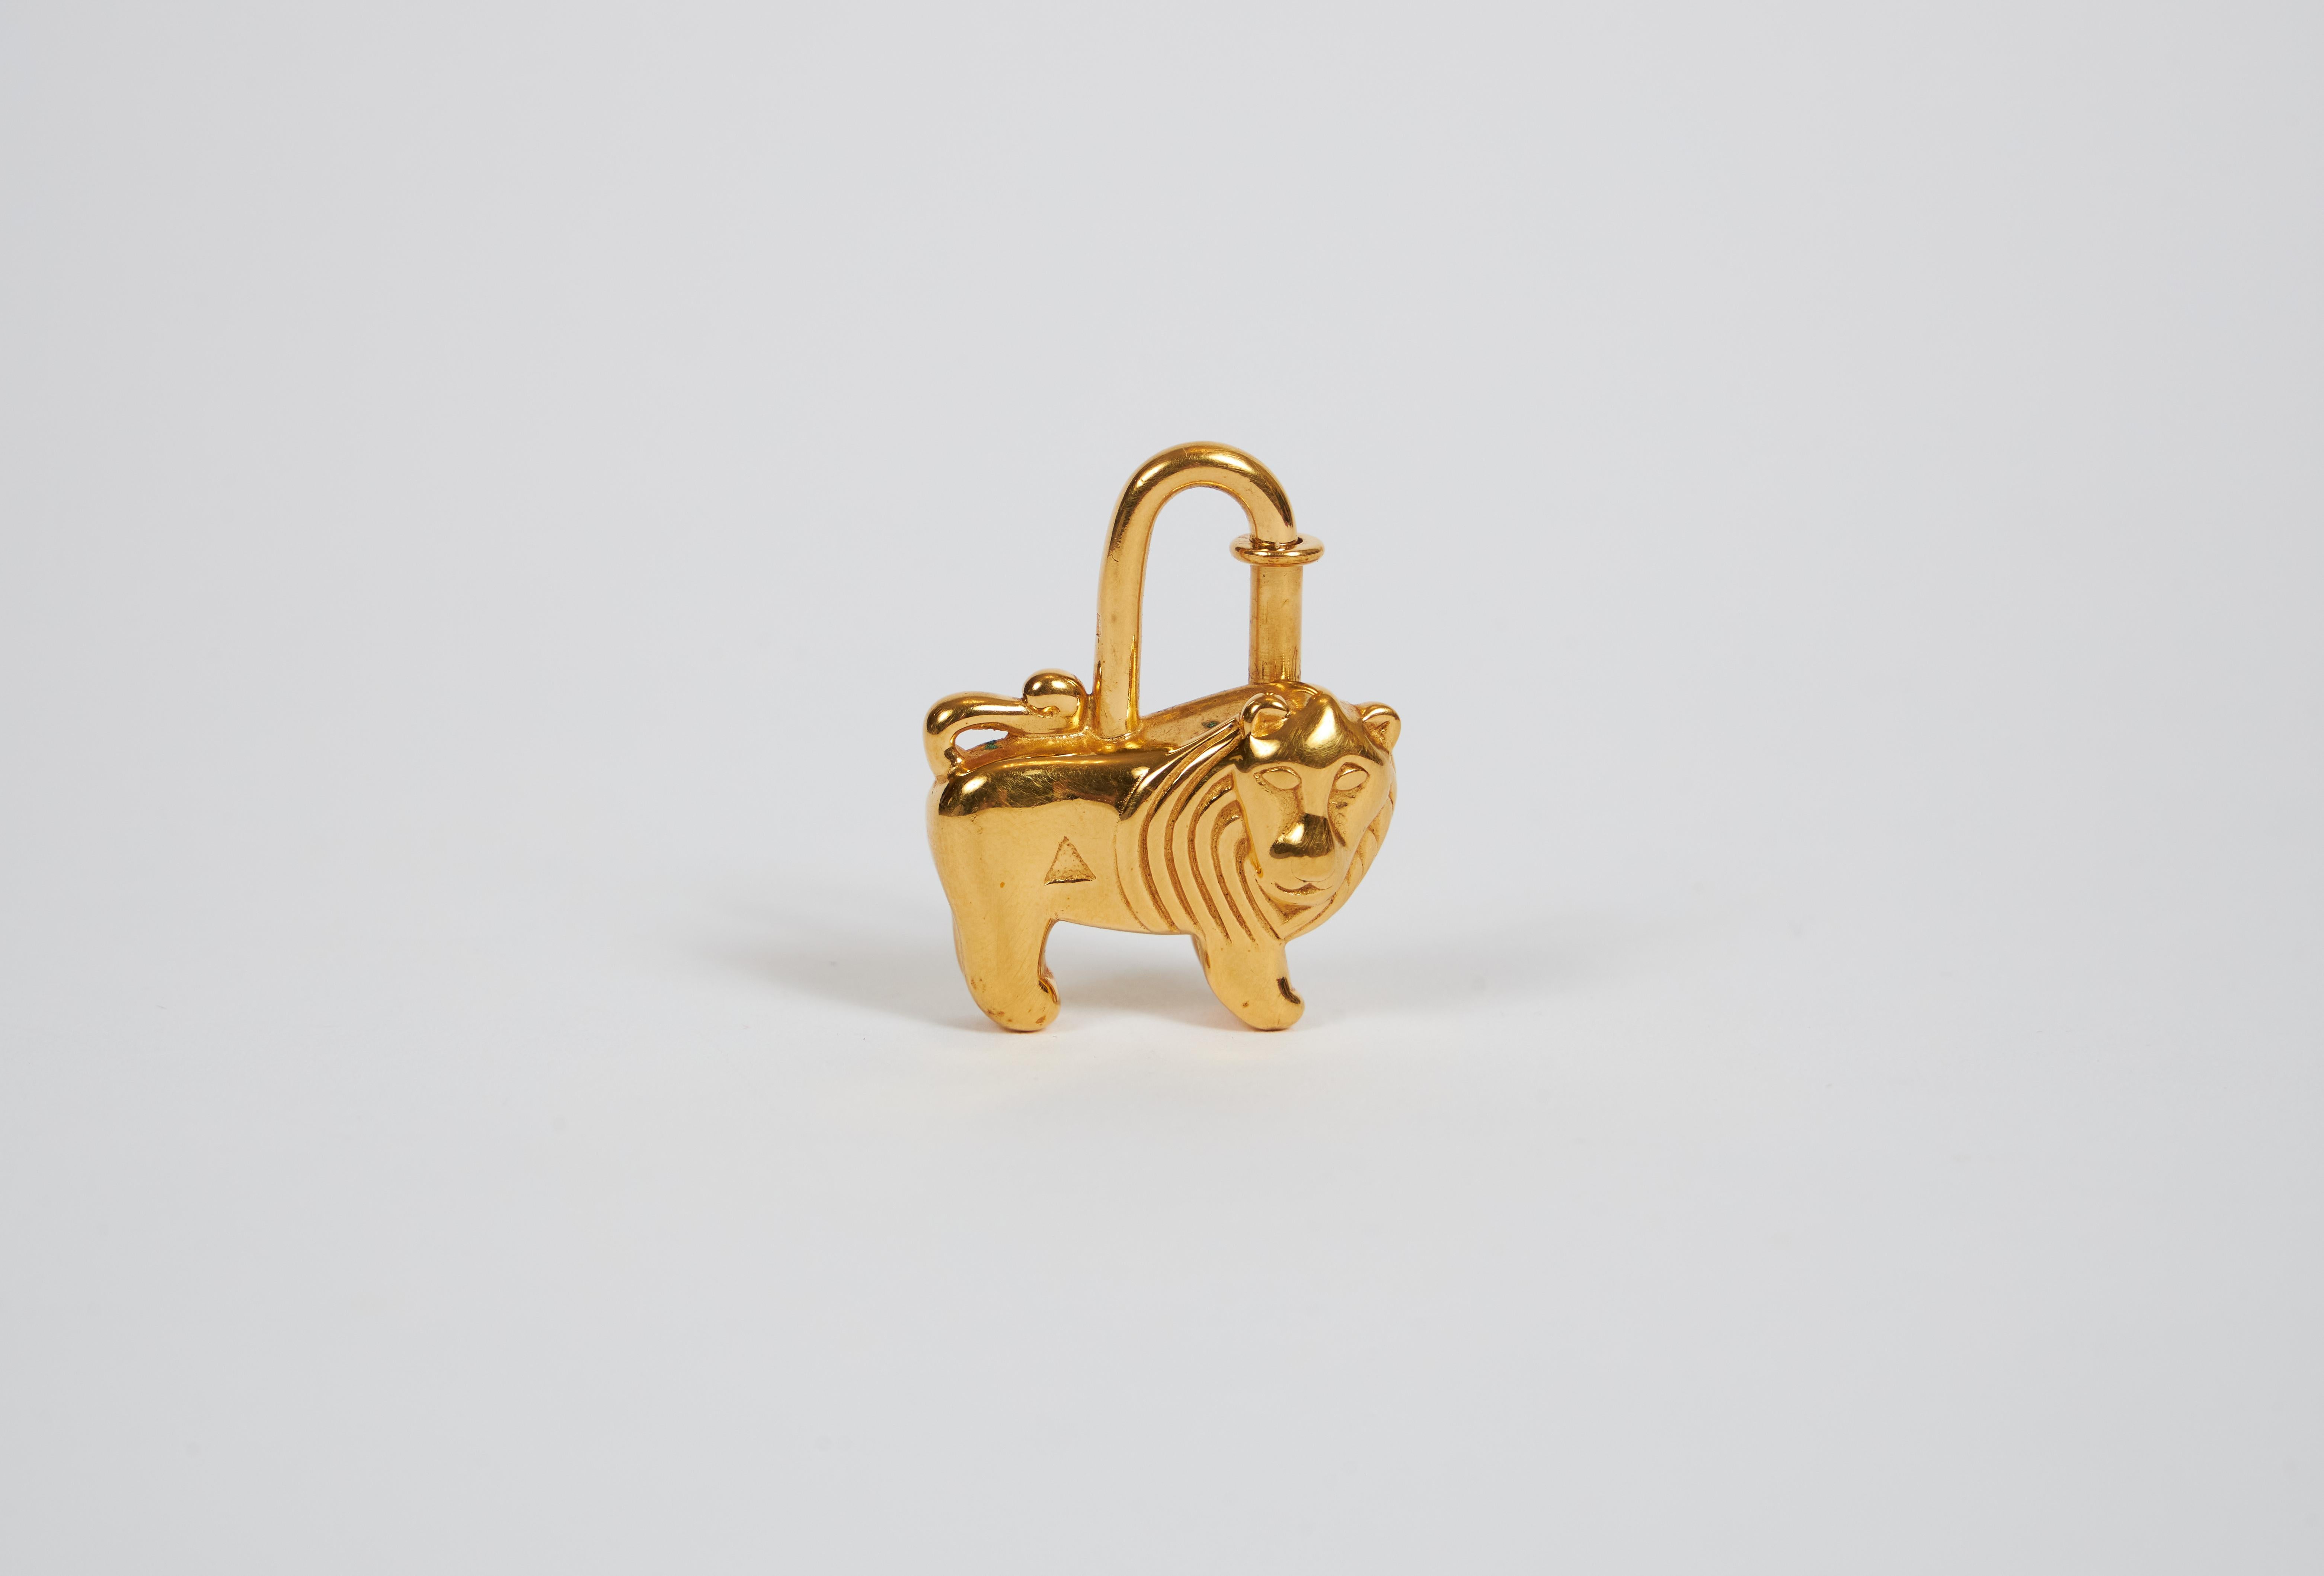 1997 Authentic Hermes Cadena lock lion gold charm. Excellent condition with original box.